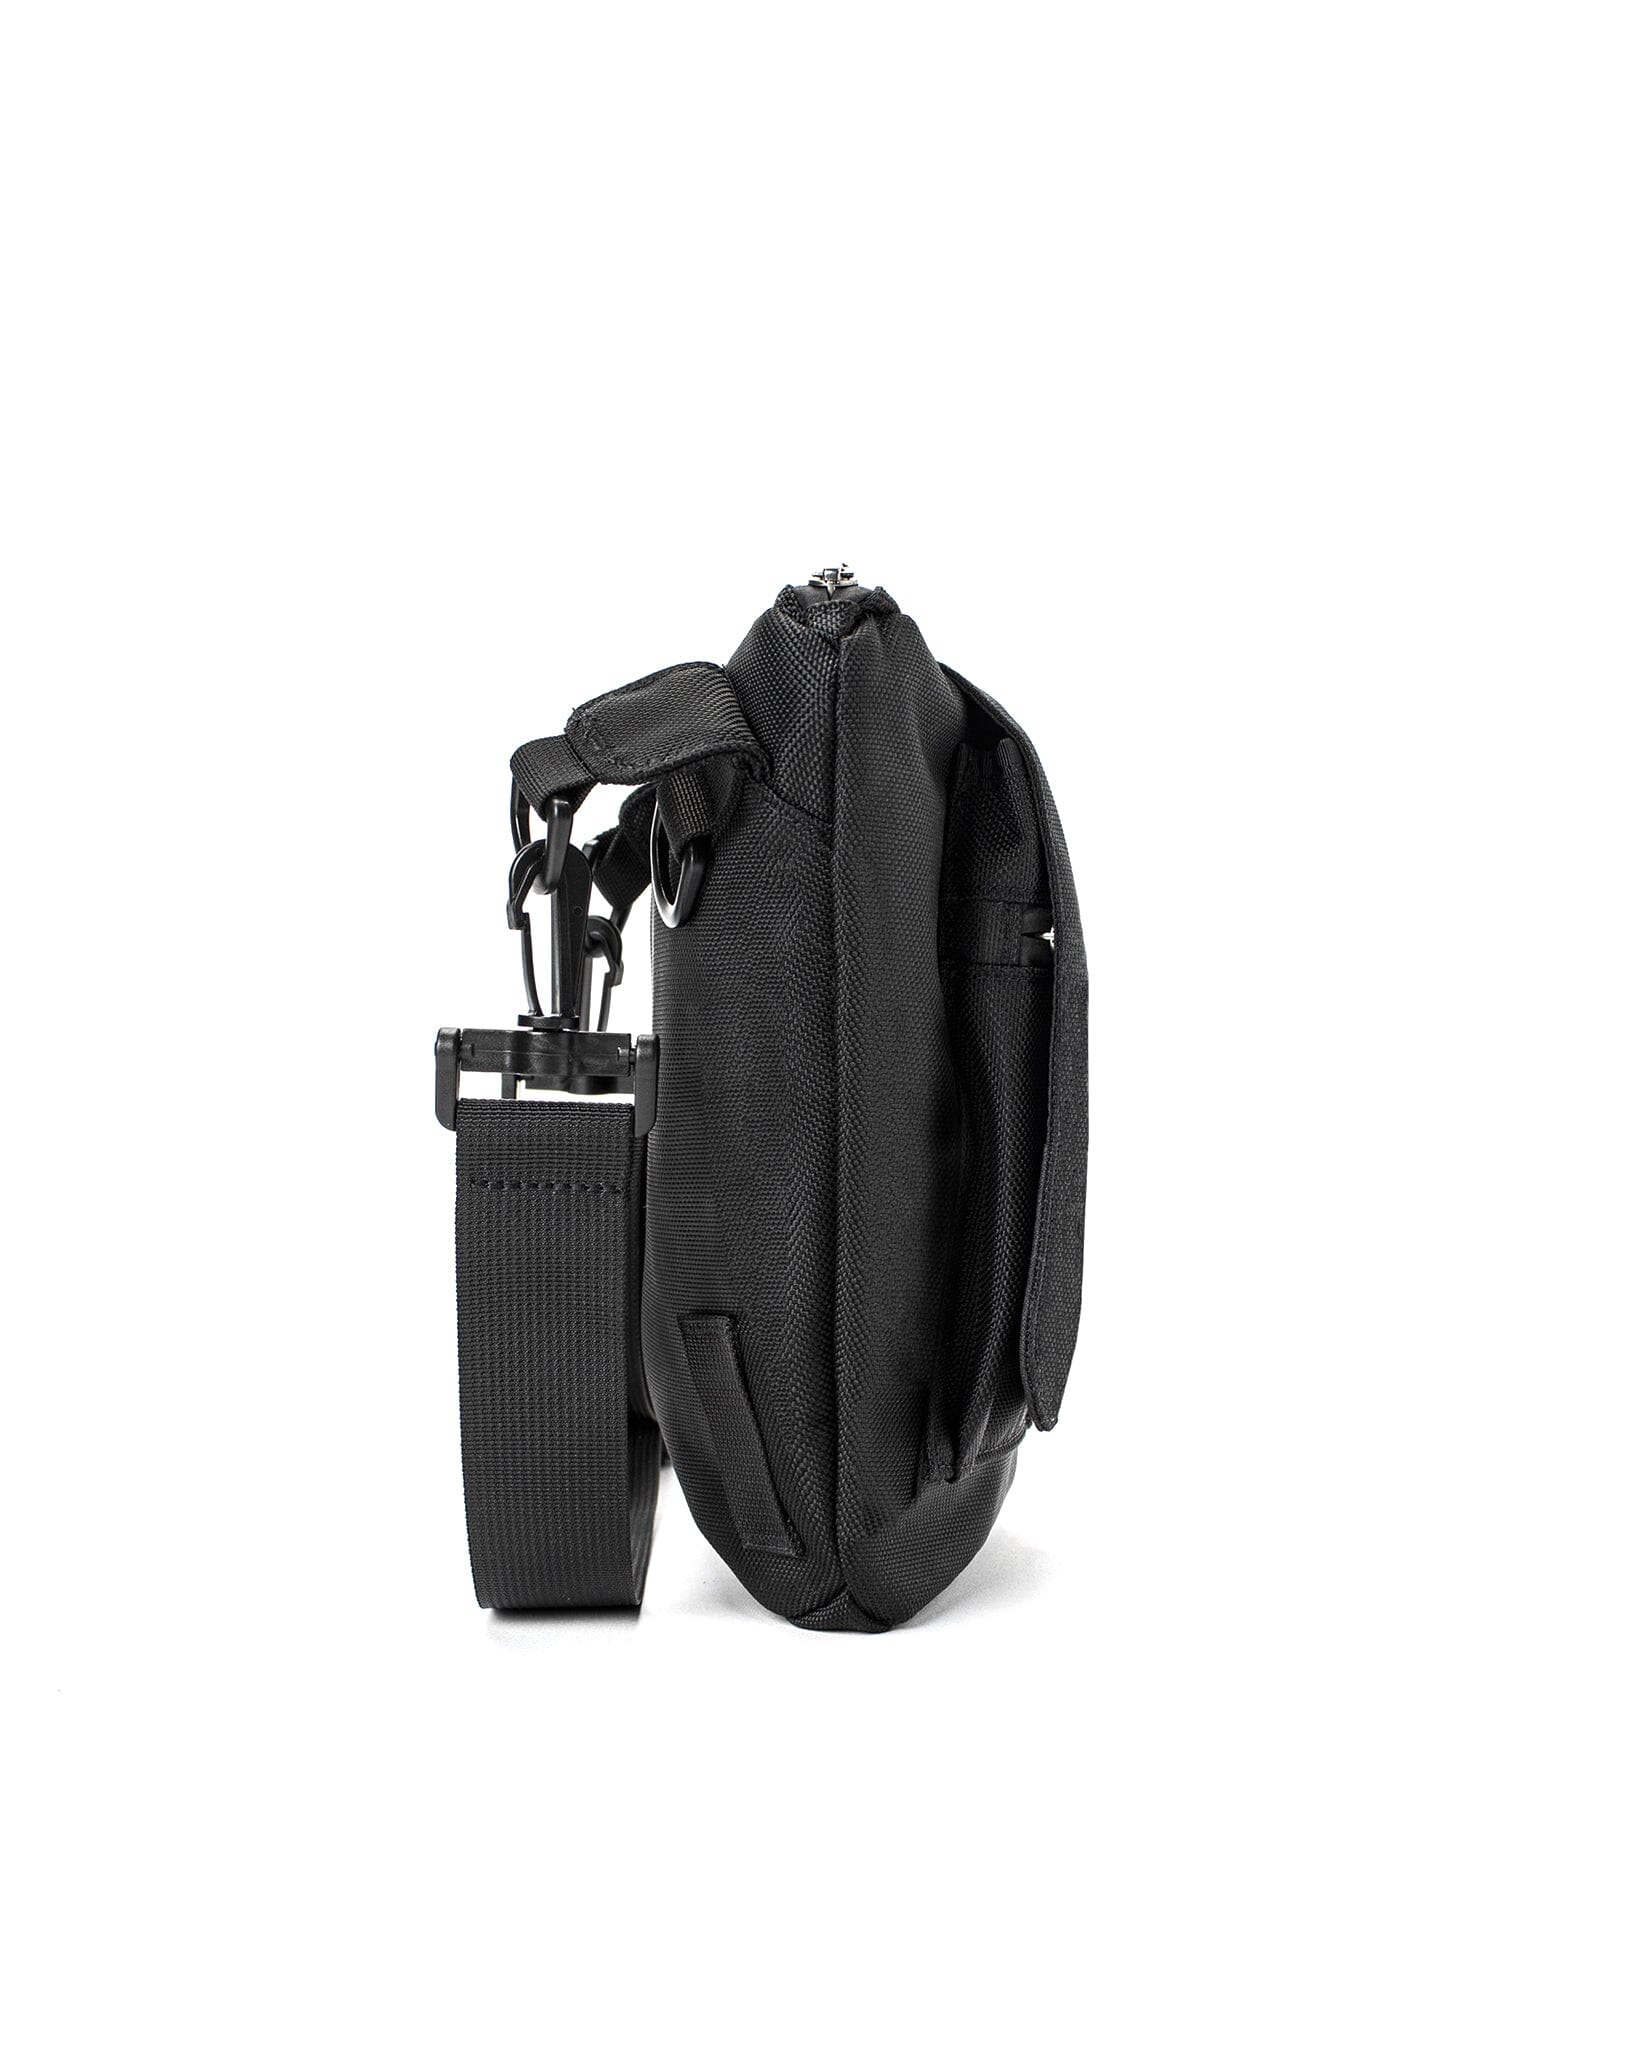 Small Carry - Stealth Bag bolstr   